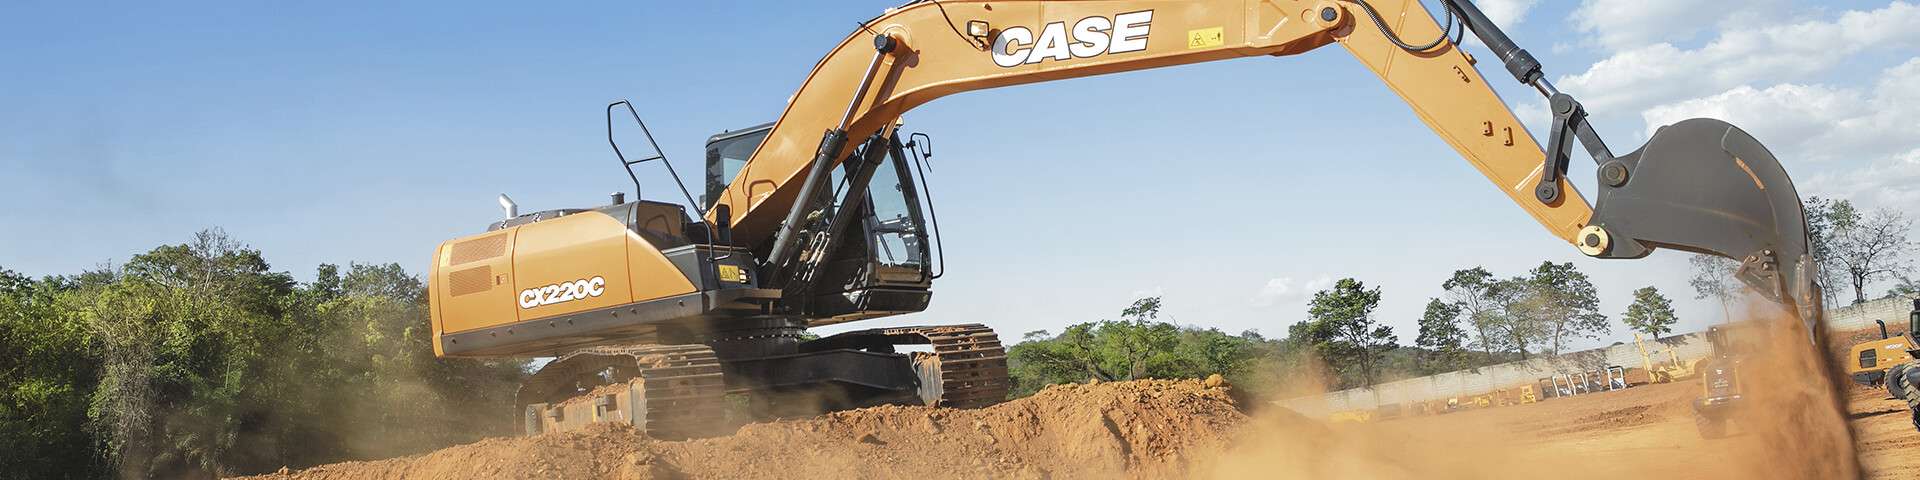 CASE Construction Equipment range